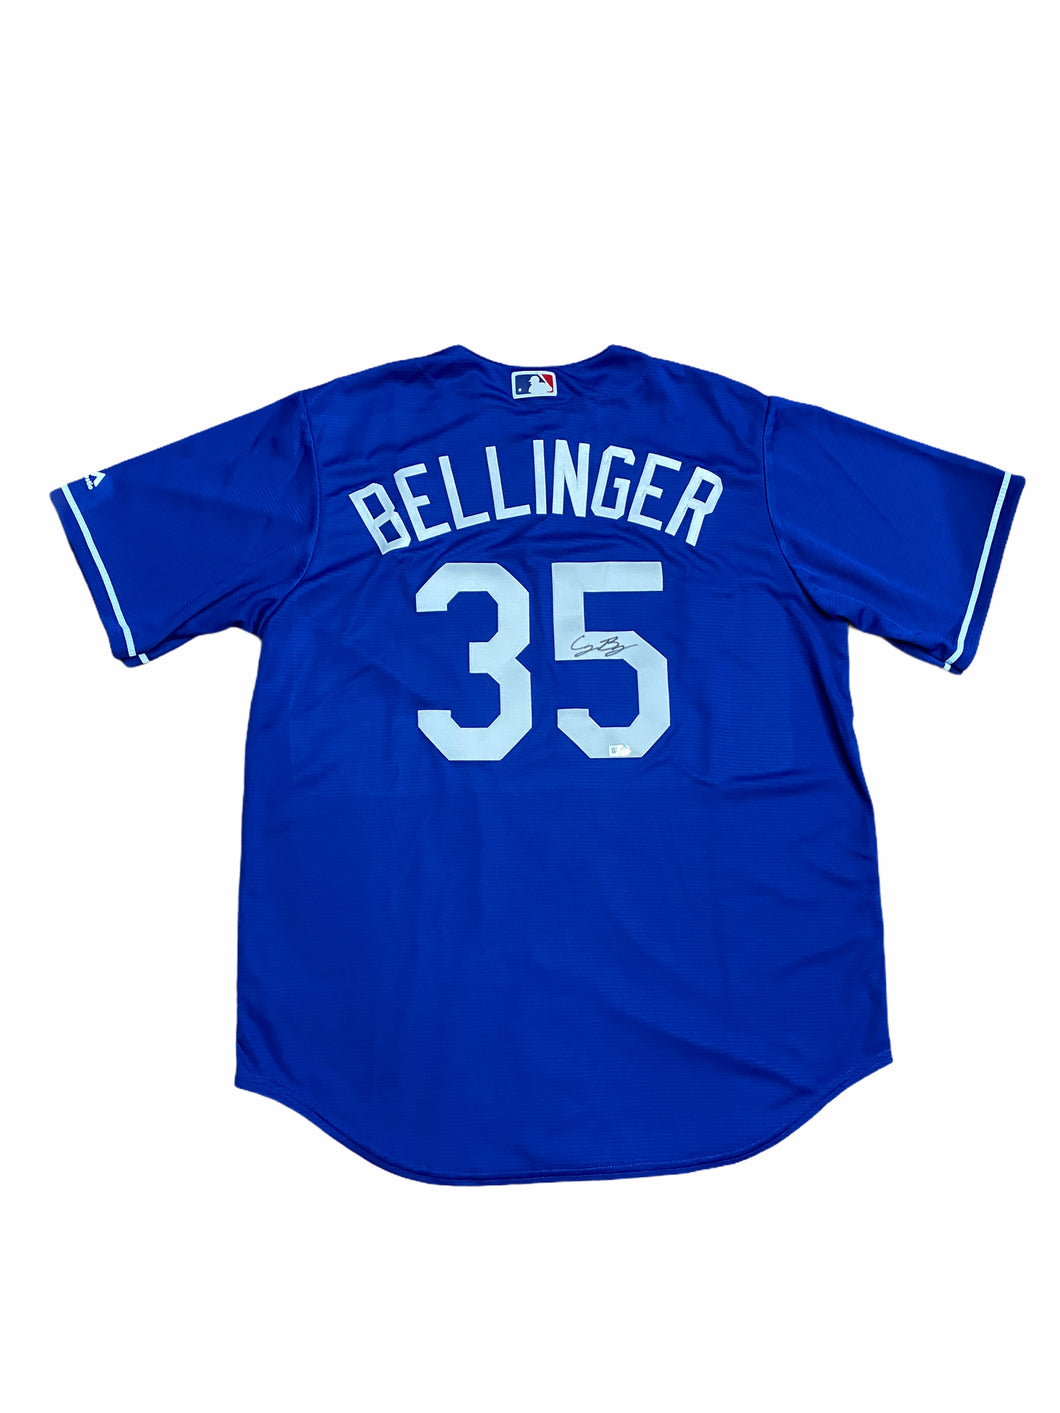 Jersey / Dodgers / Cody Bellinger